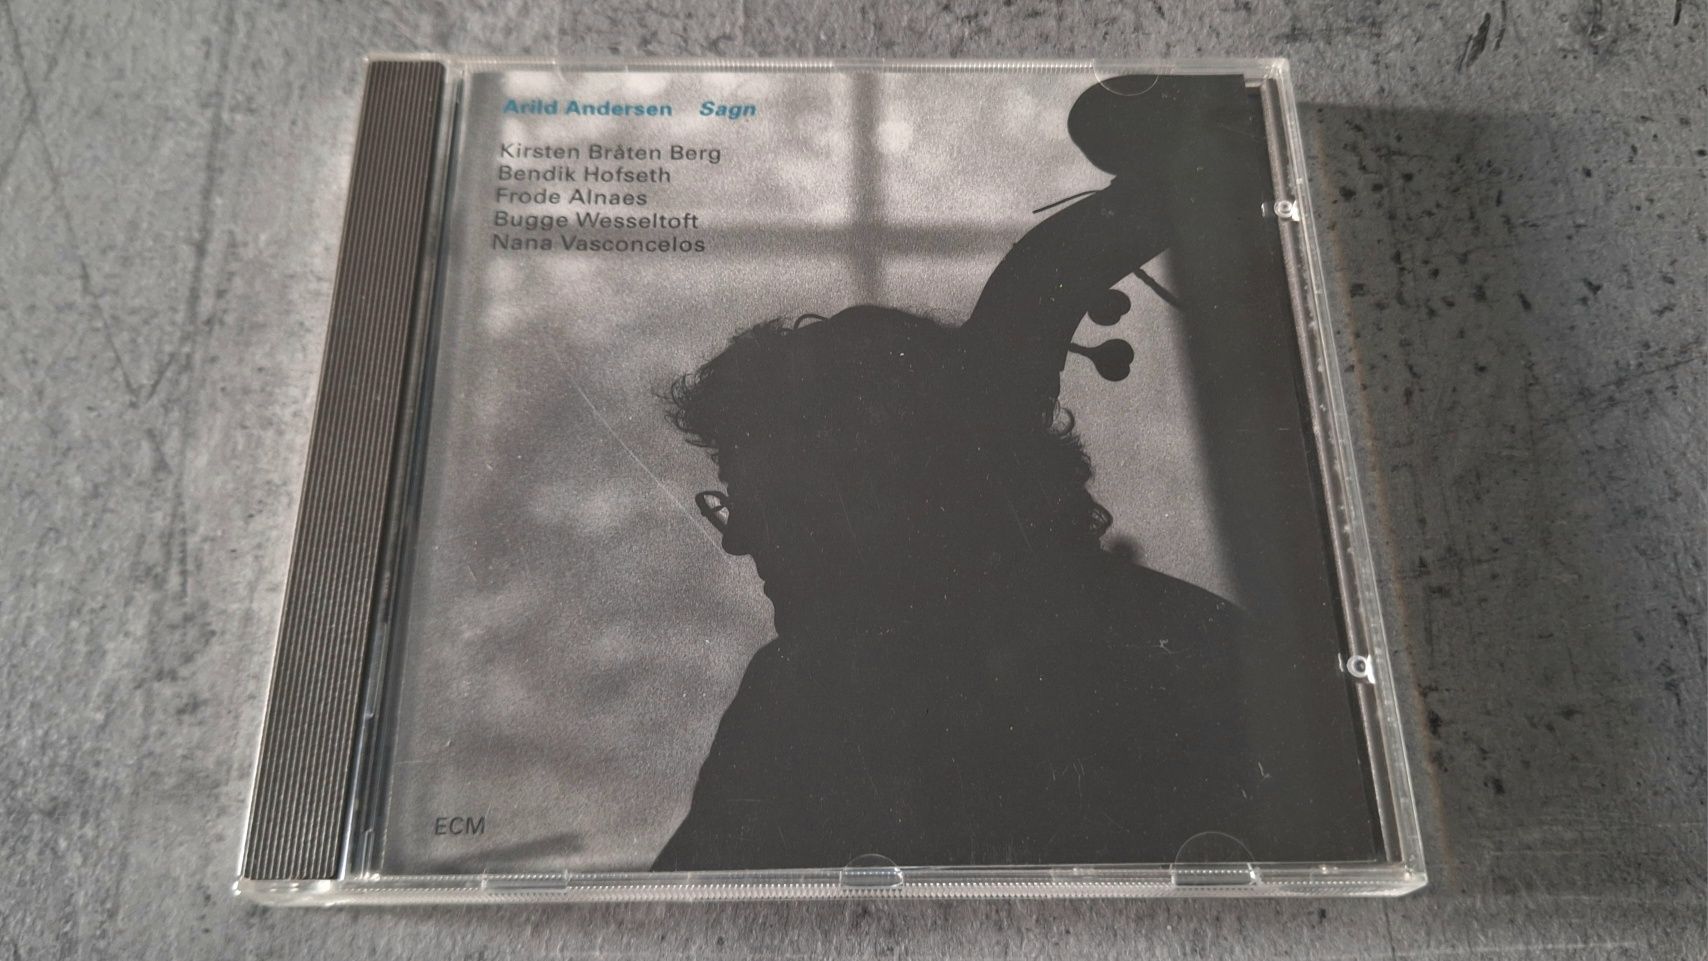 Arild Andersen-Segn Płyta CD